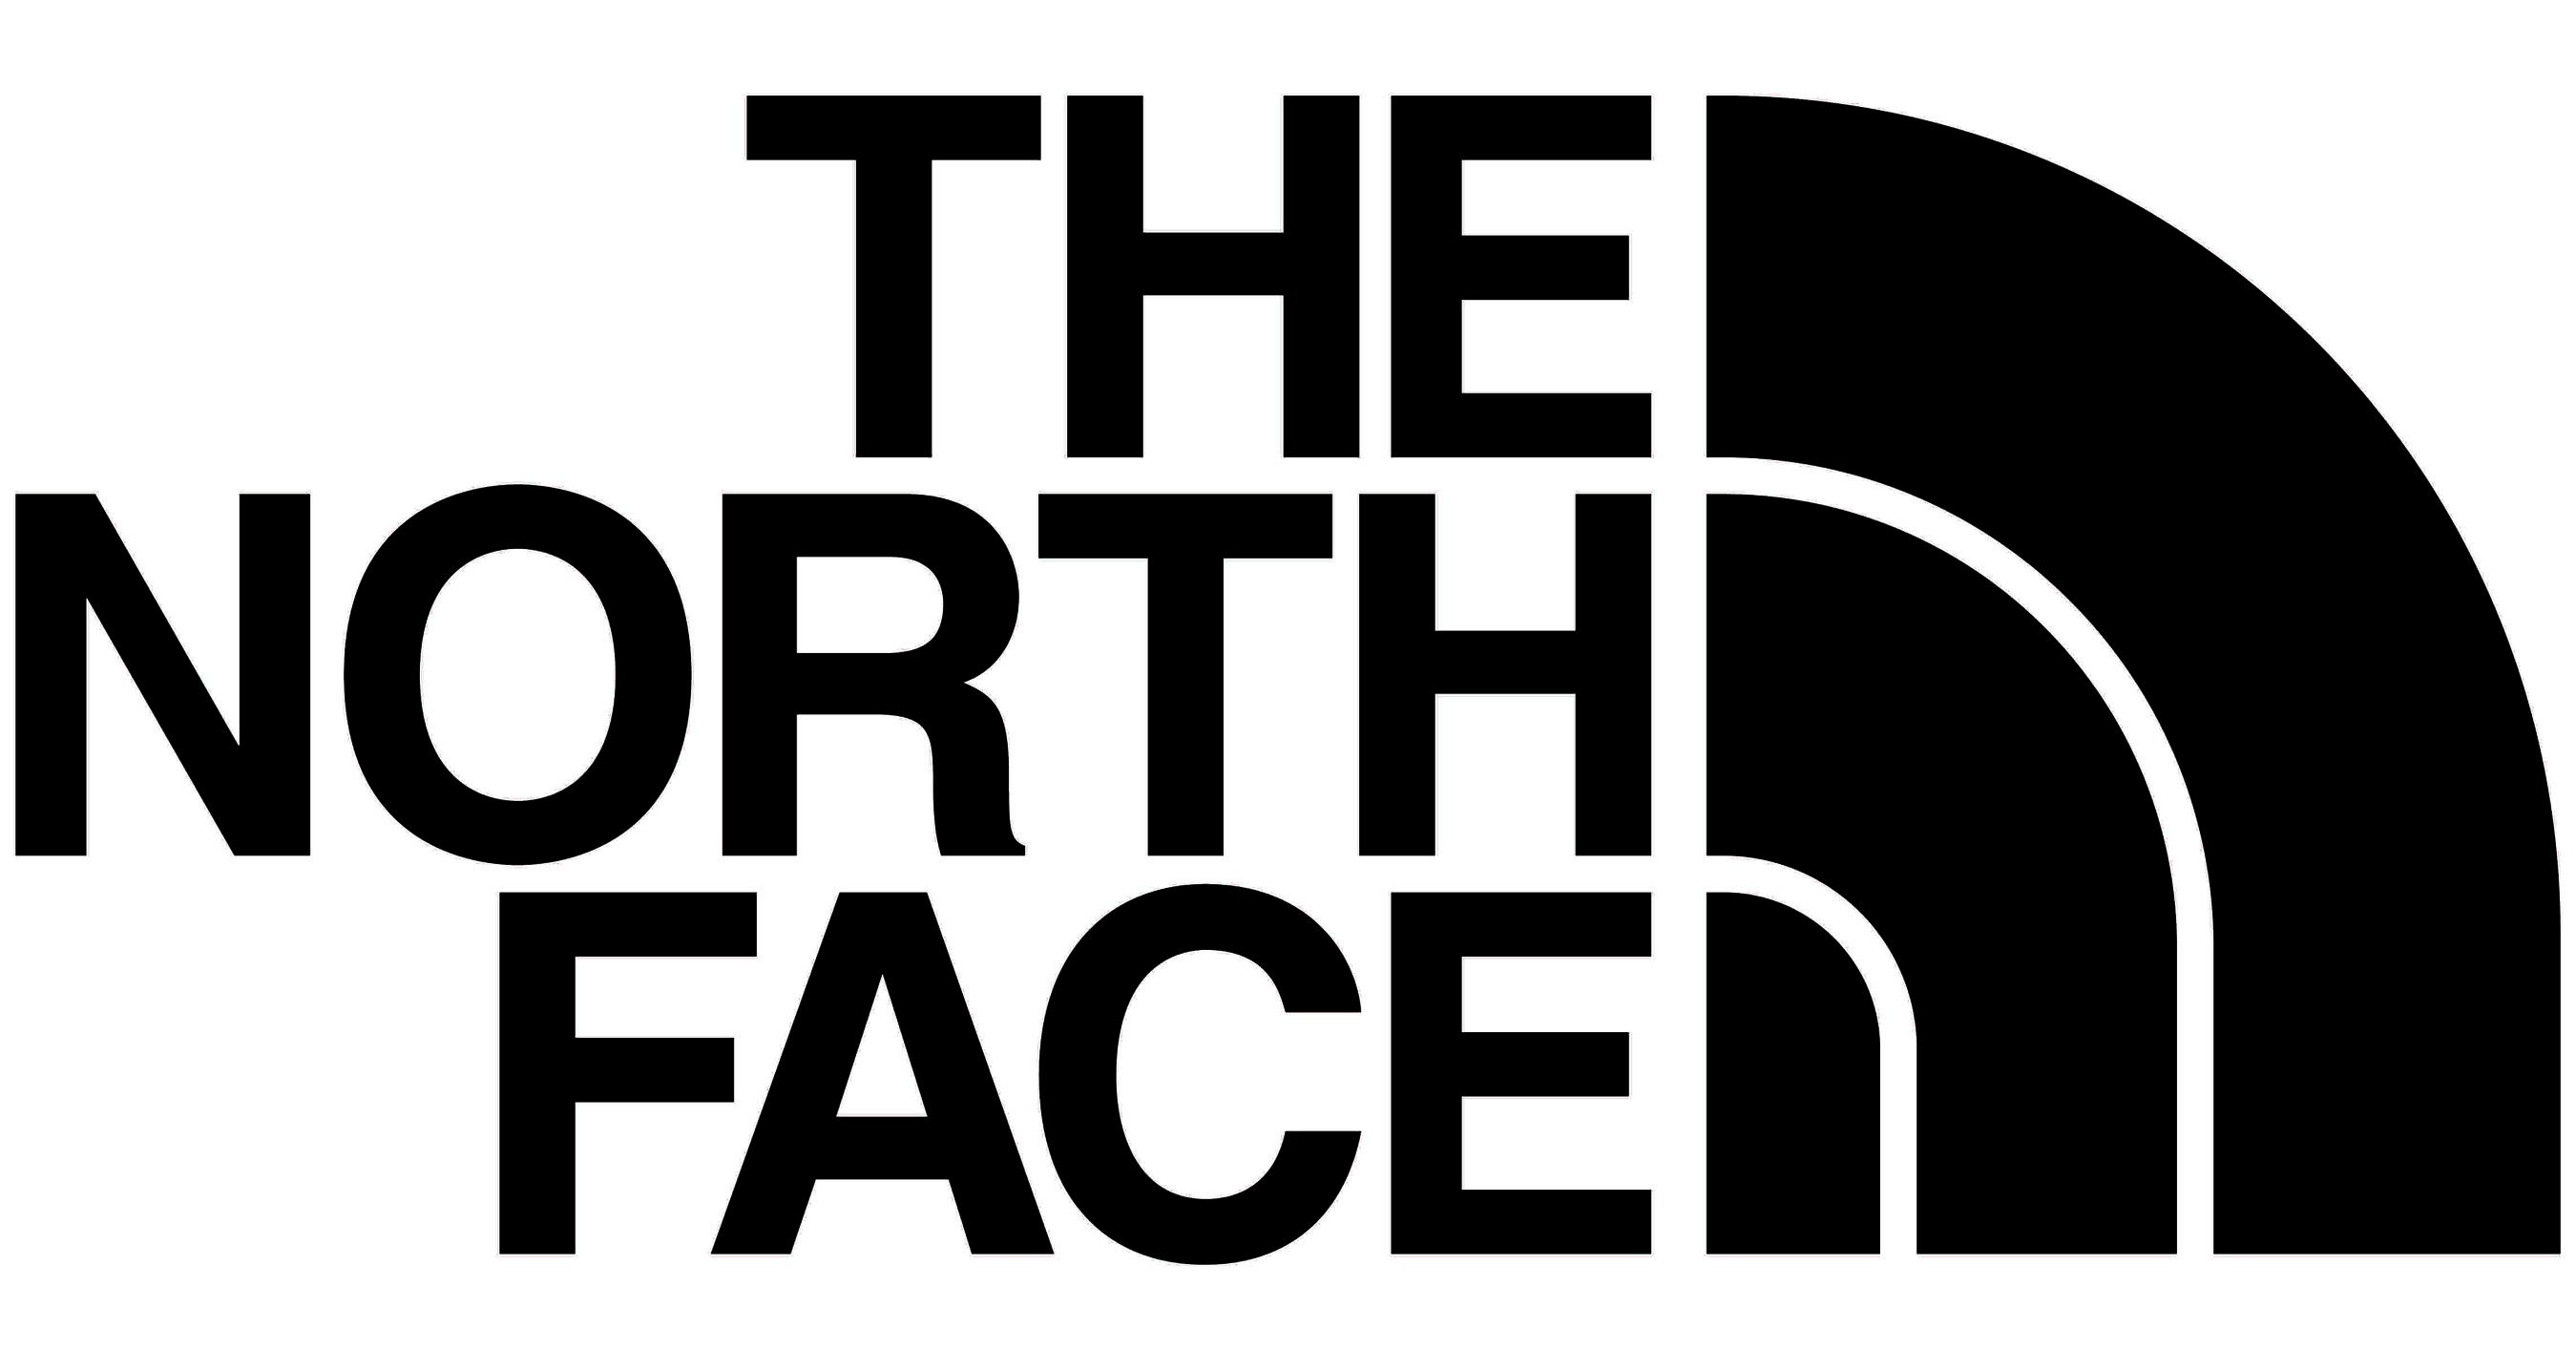 https://mma.prnewswire.com/media/339883/the_north_face_logo.jpg?p=facebook